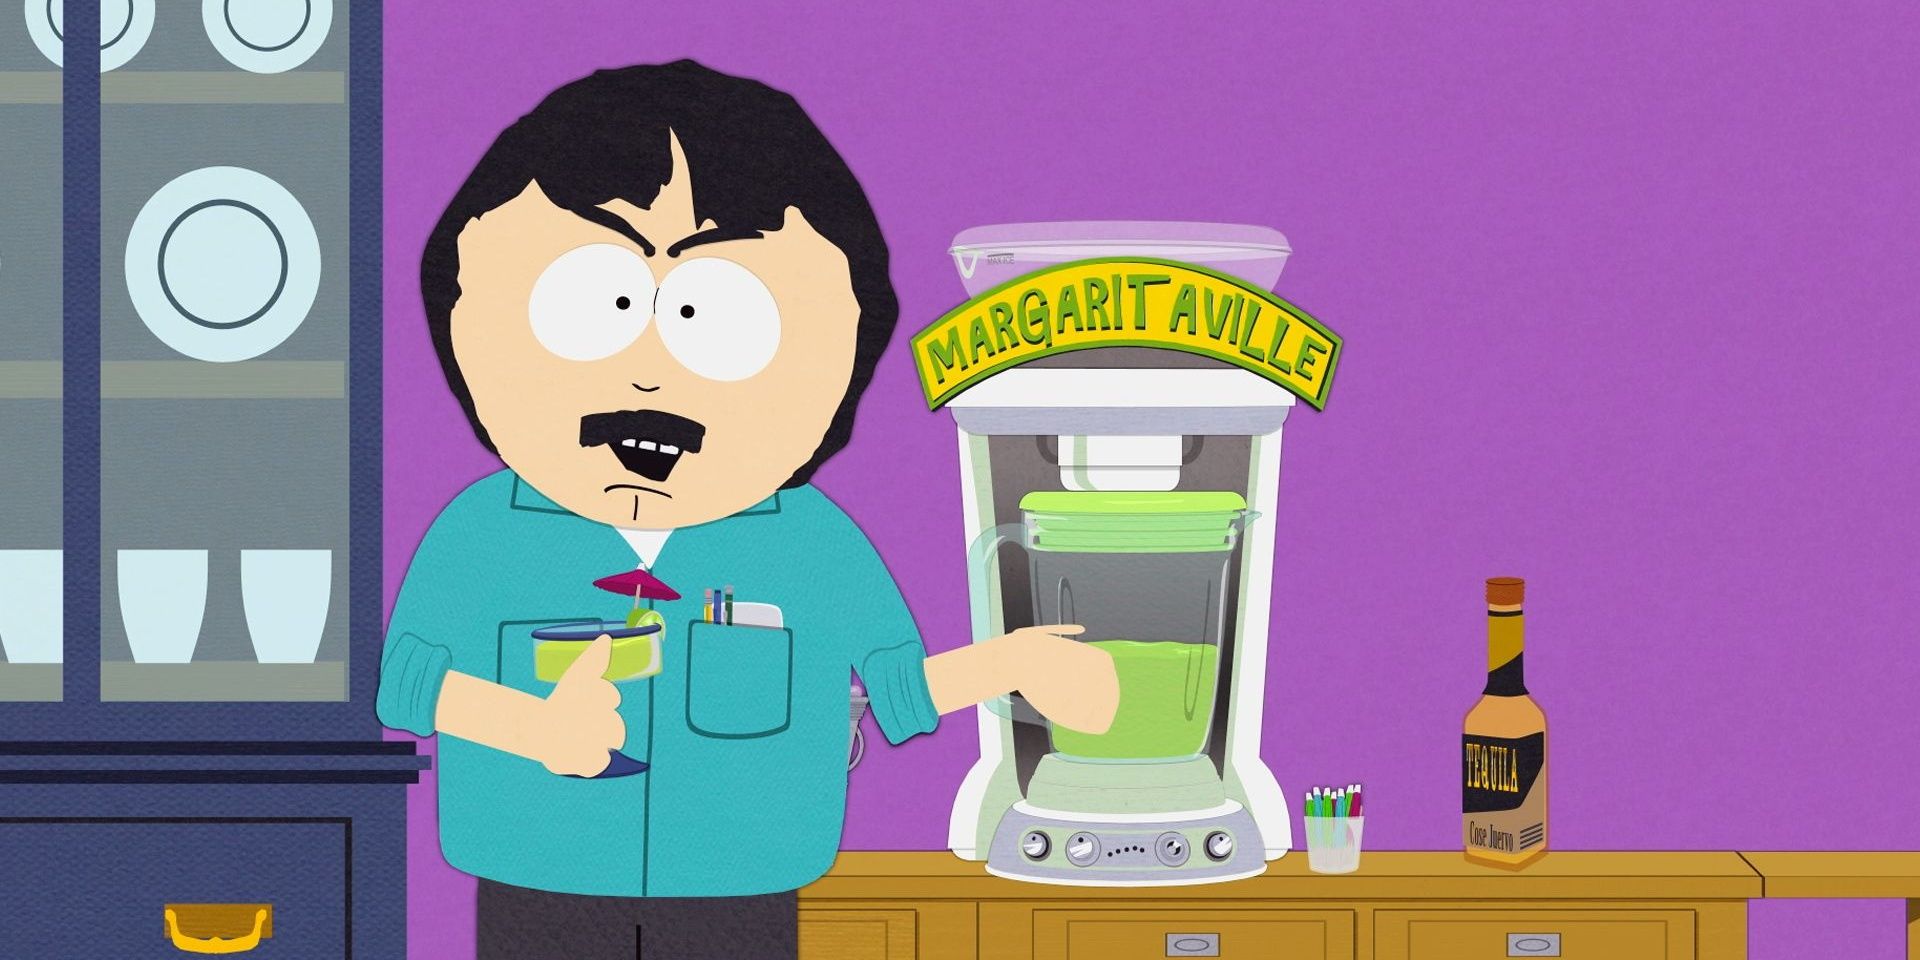 Randy in Margaritaville, a South Park episode